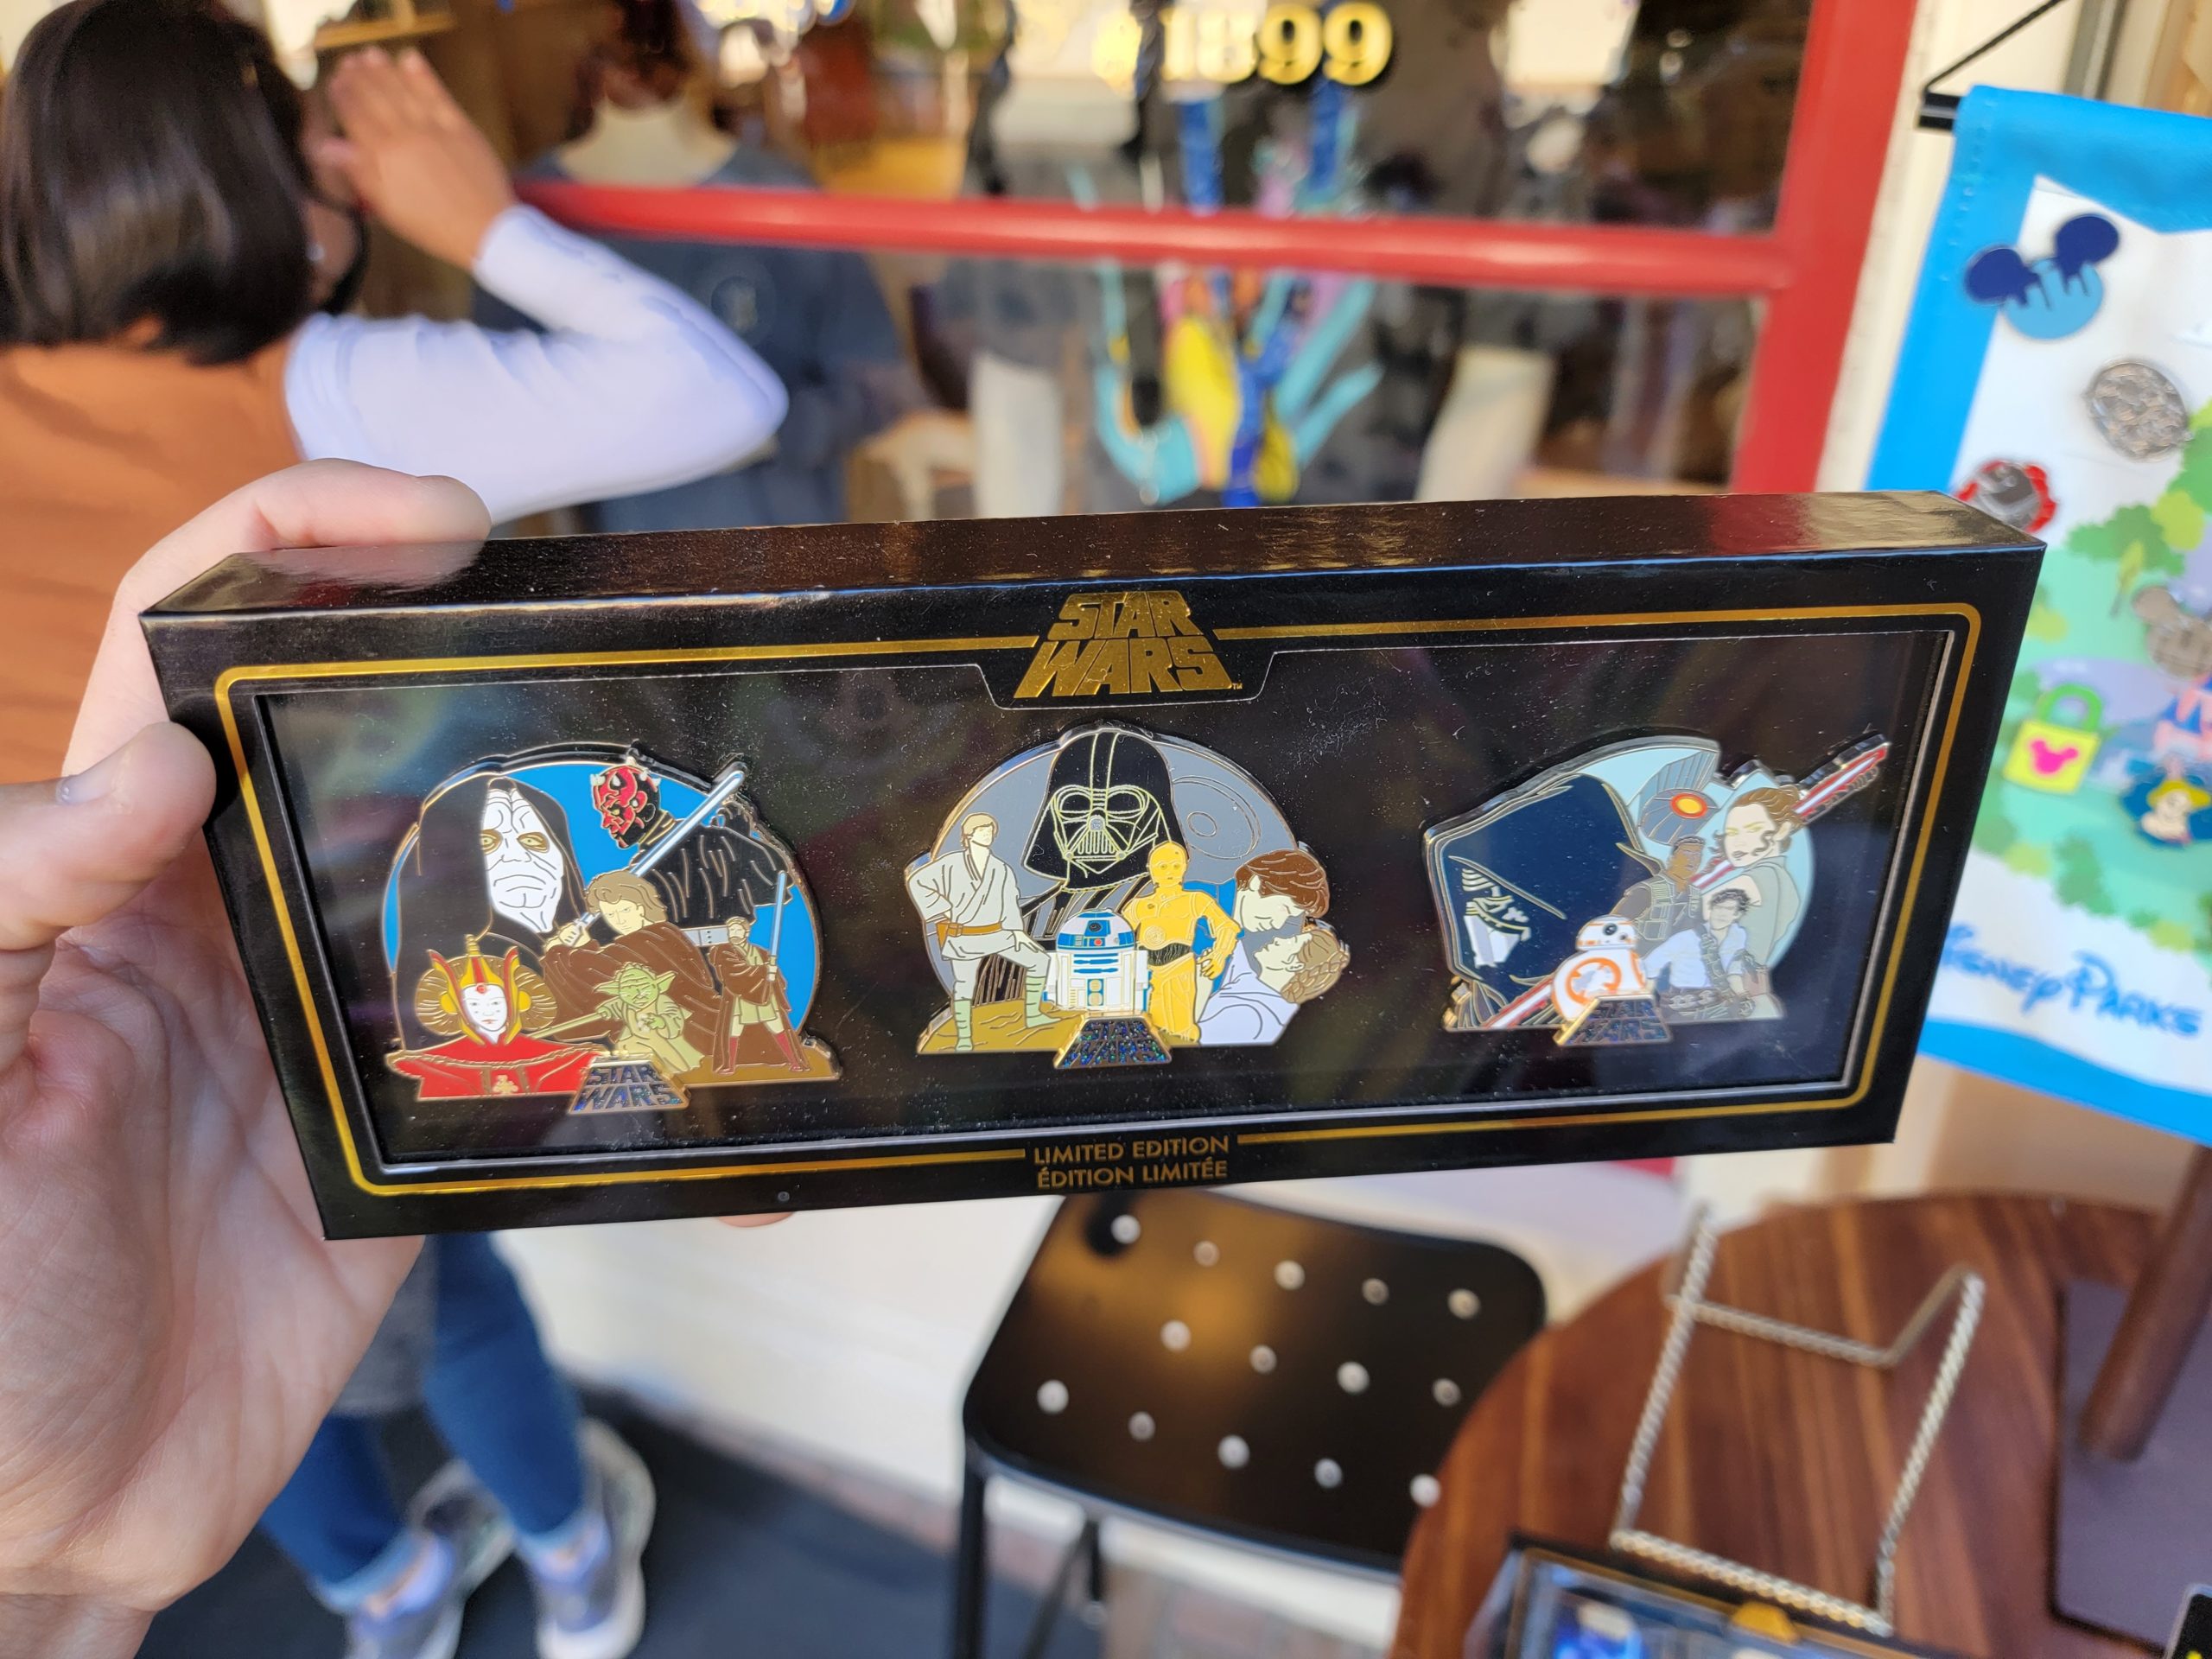 STAR WARS LIGHT SIDE & DARK SIDE 2 Disney Parks 4-Pin Sets on Card Trading Pins